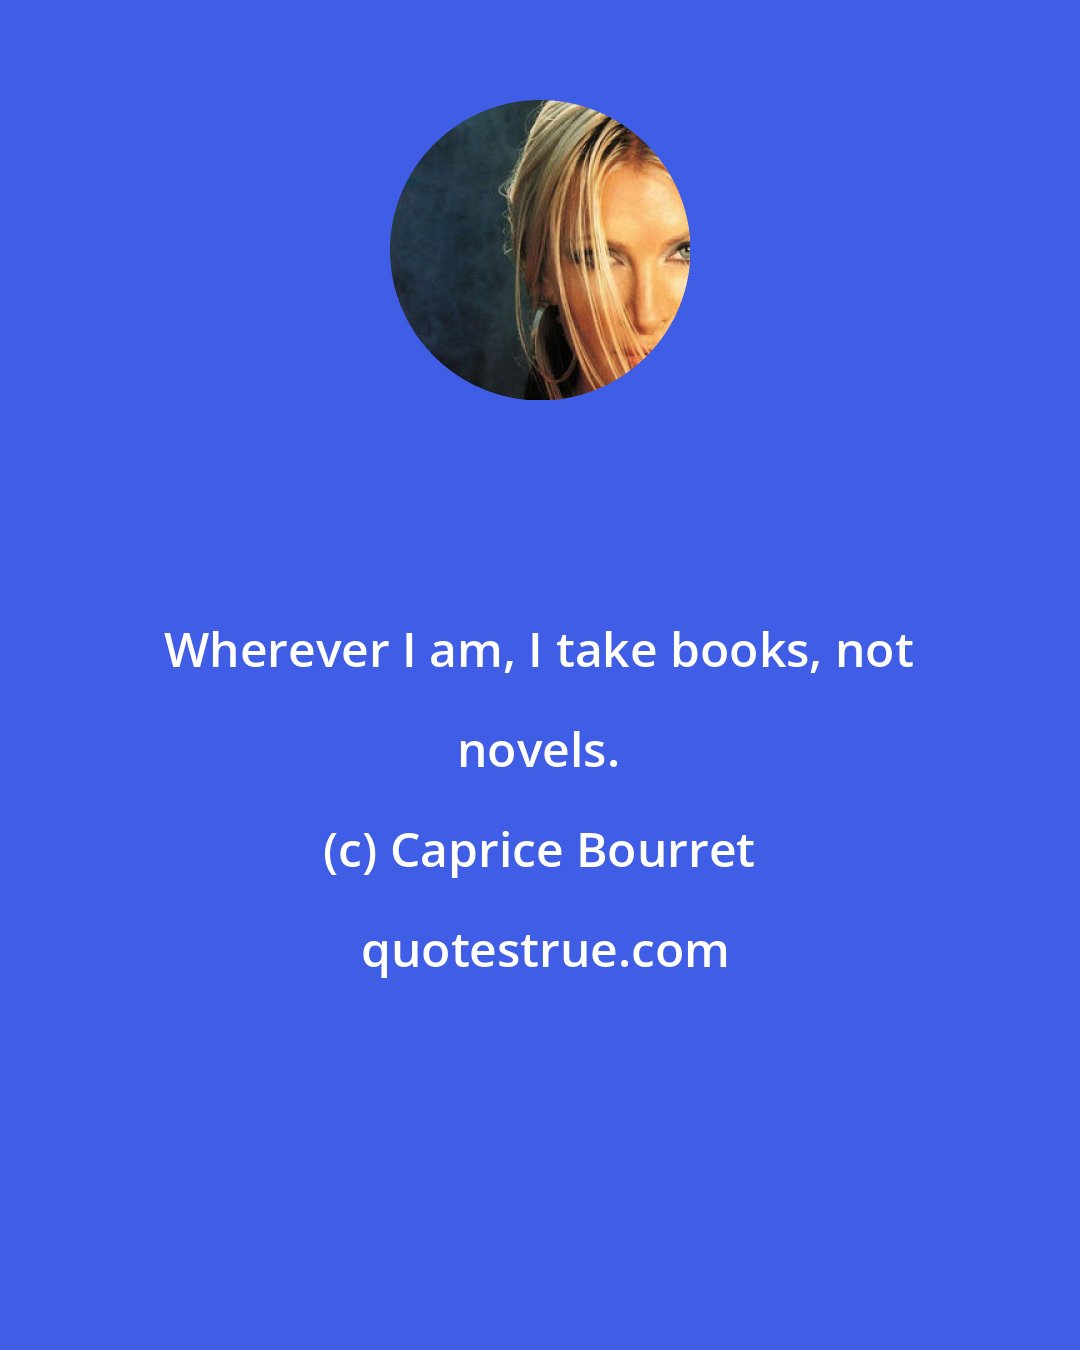 Caprice Bourret: Wherever I am, I take books, not novels.